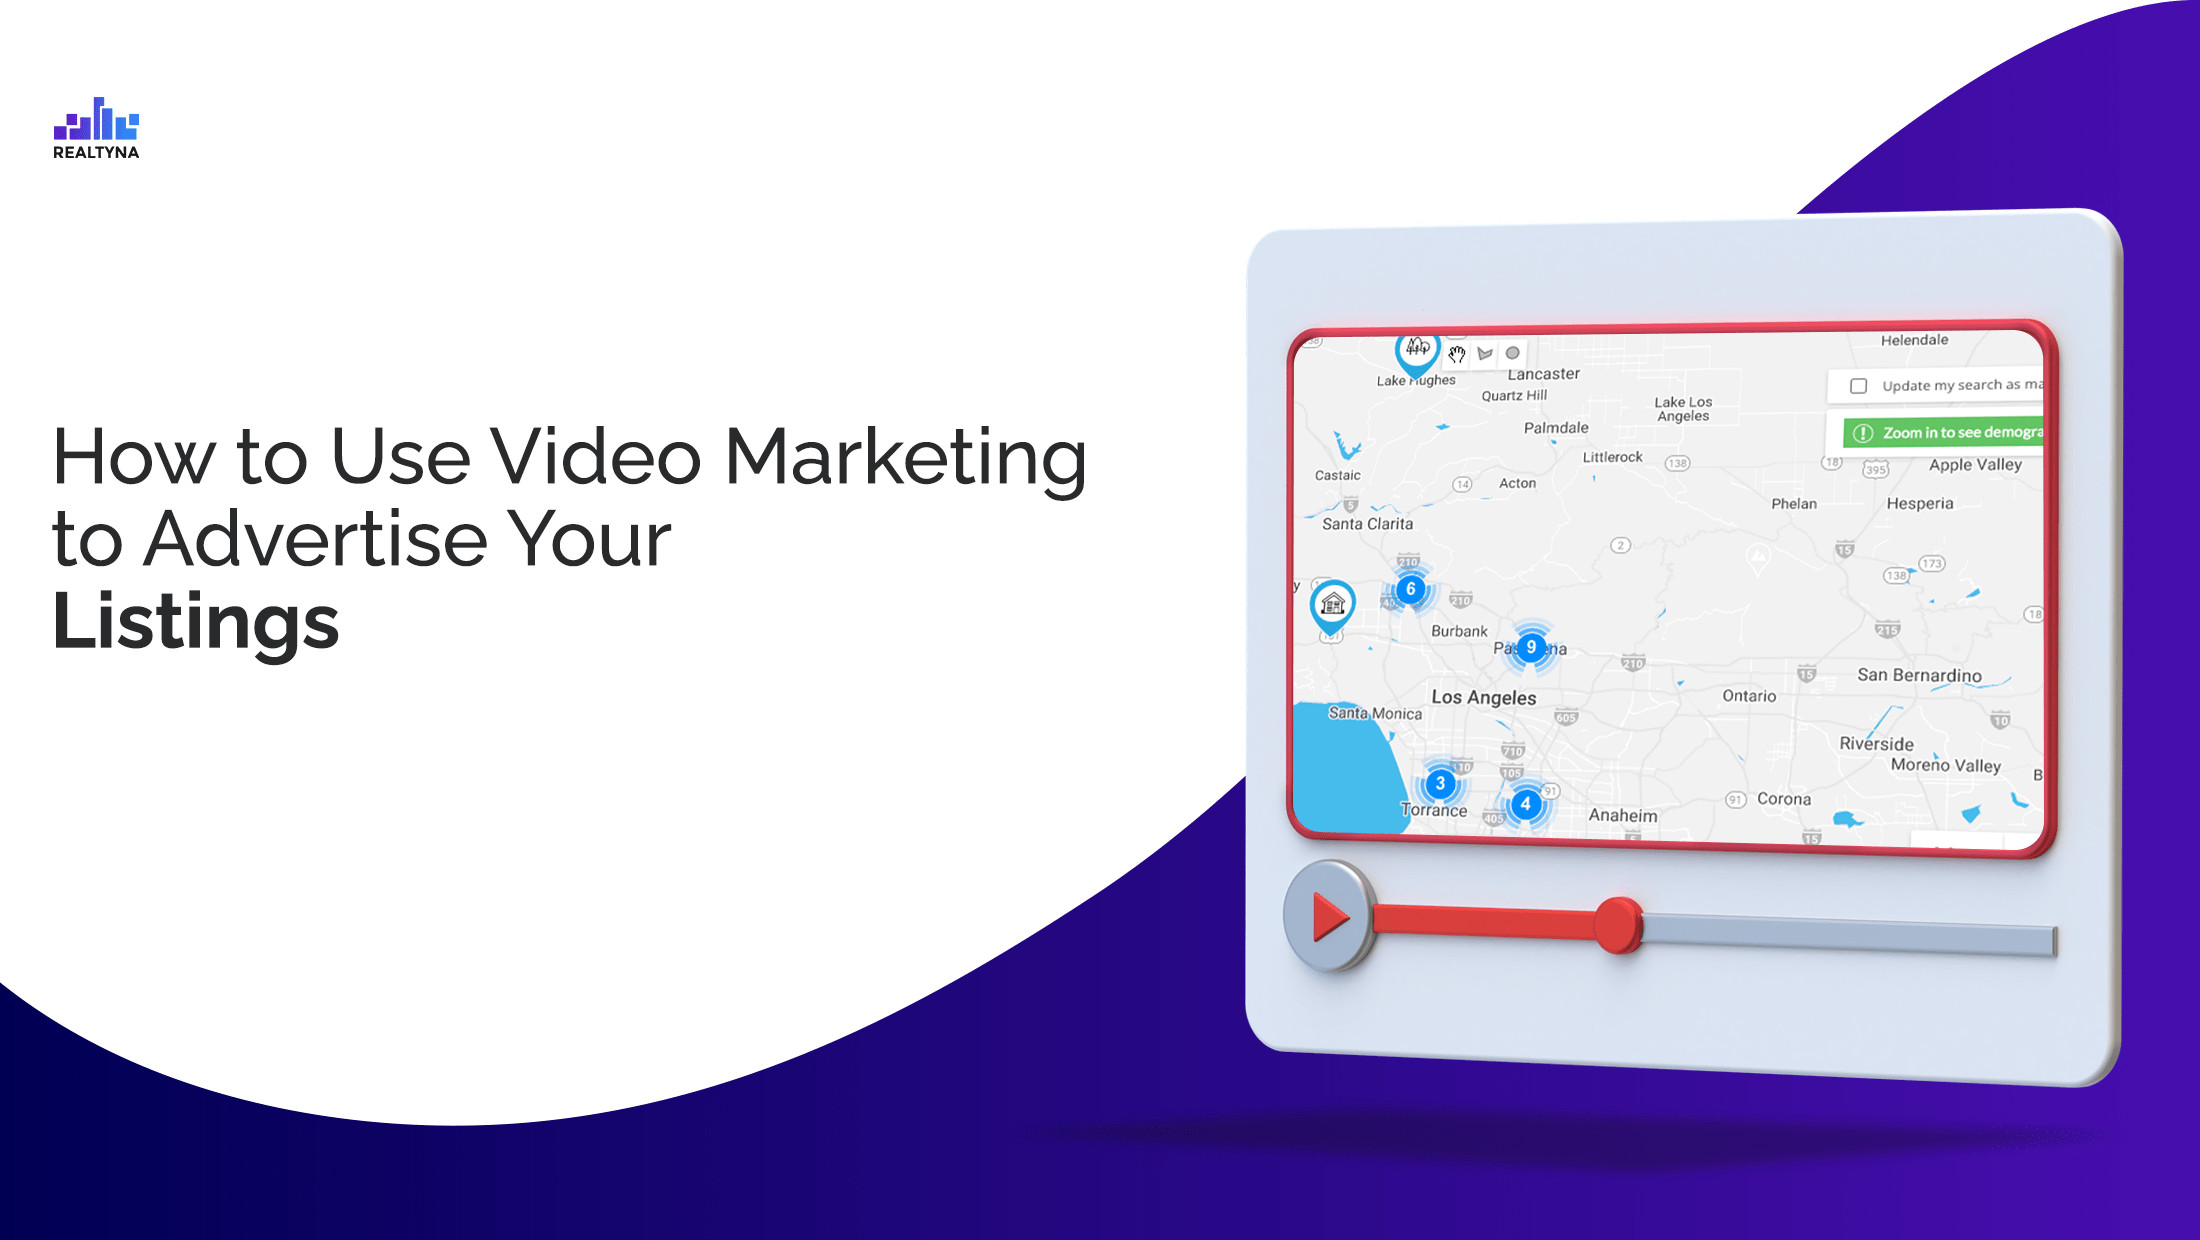 rna use video marketing advertise listings